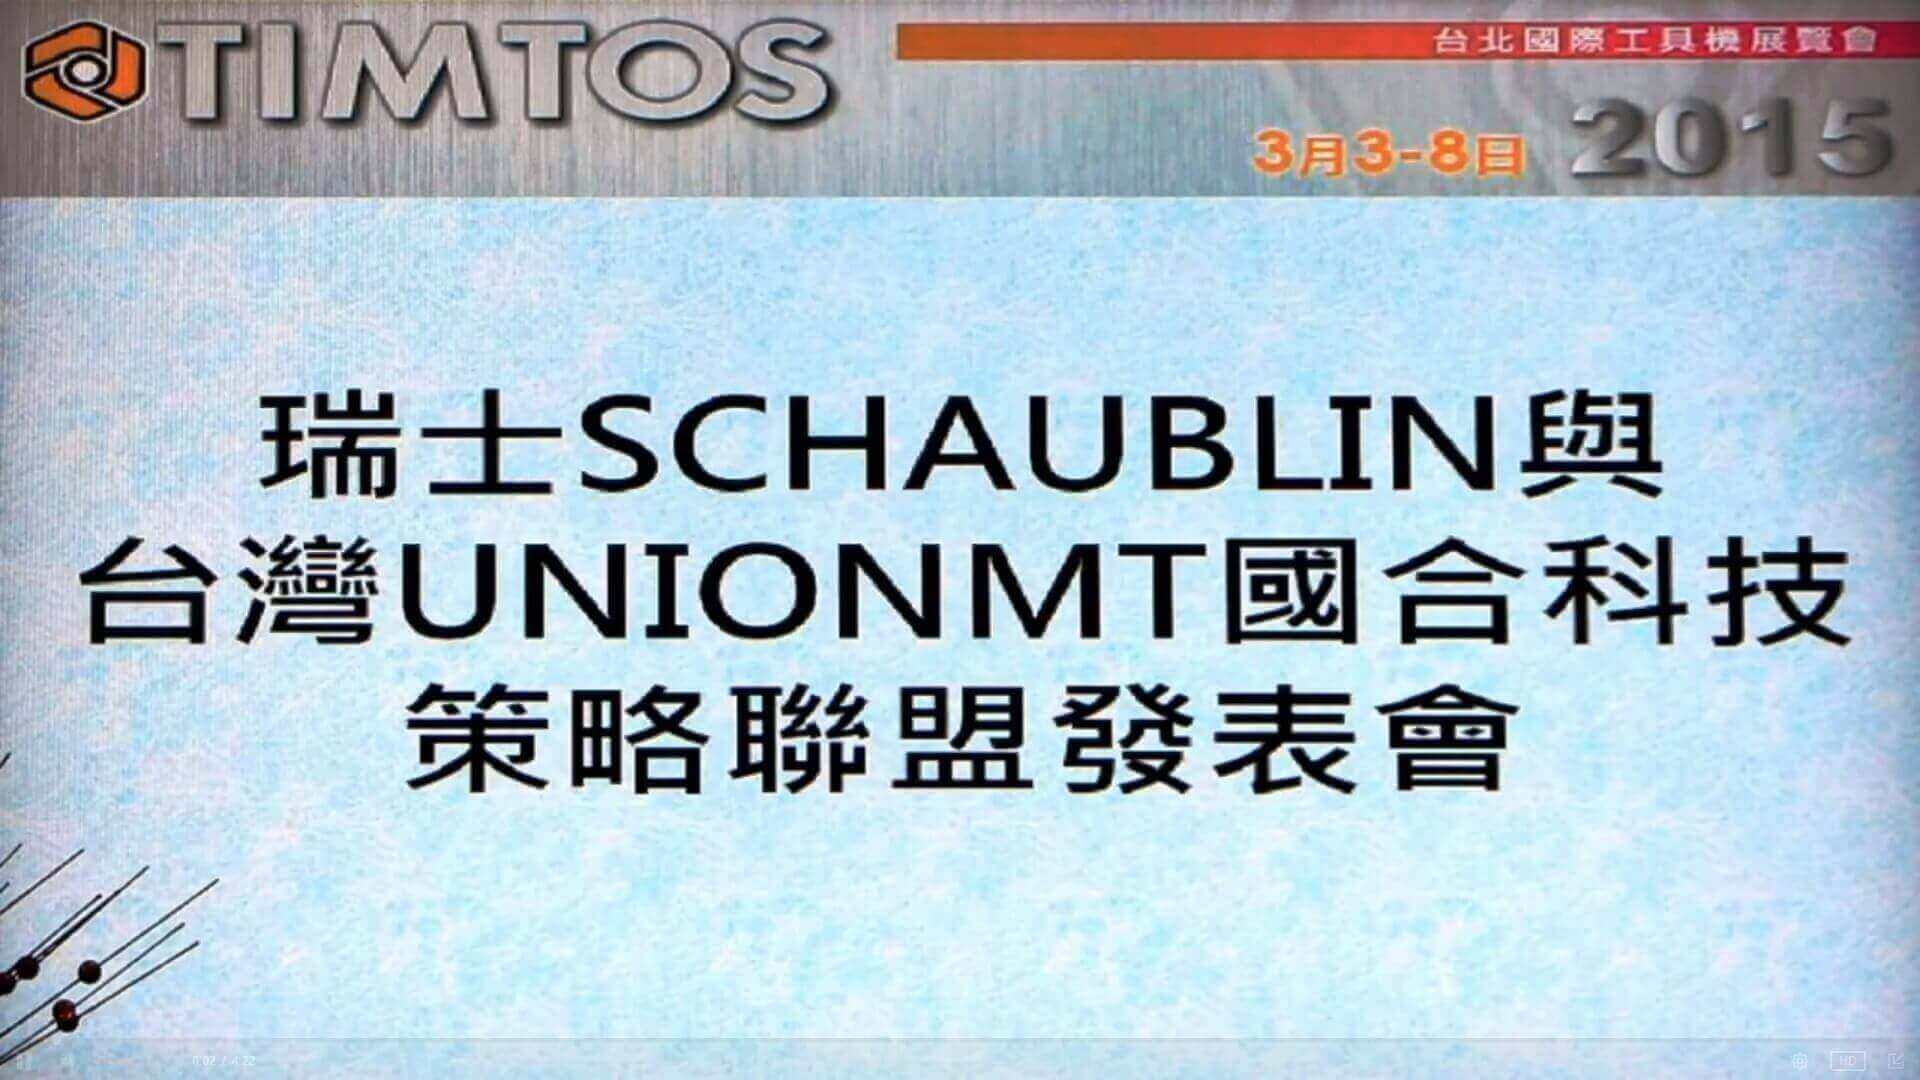 2015 Union MT - Schaublin 策略聯盟發表會